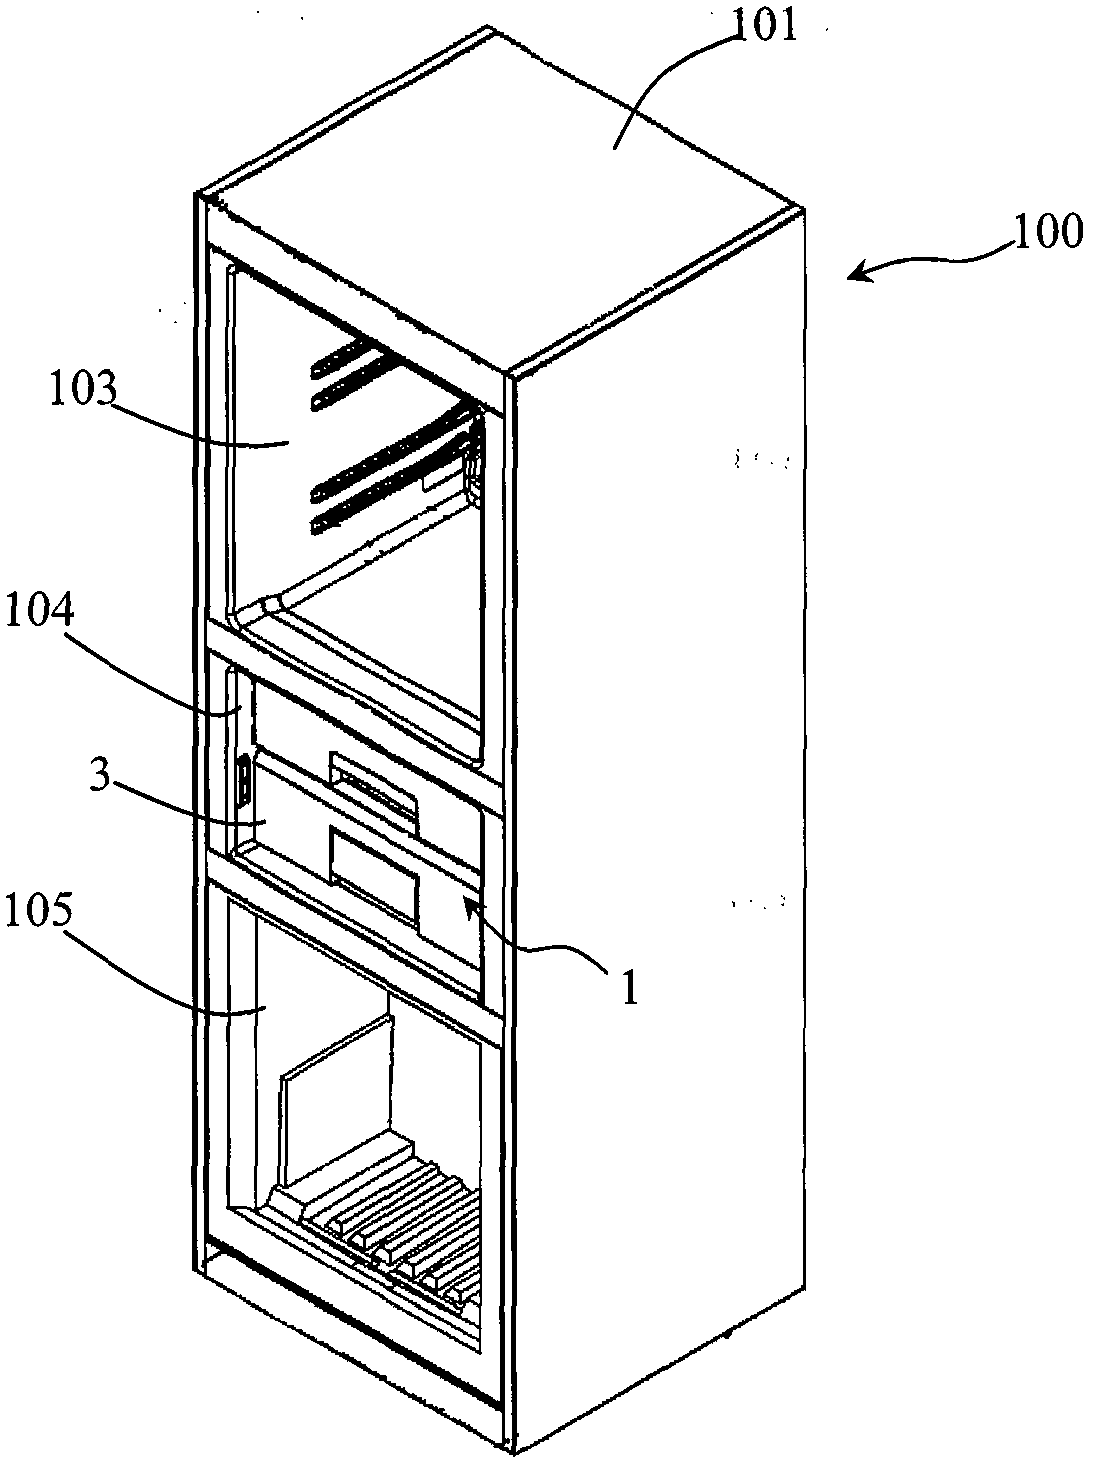 Refrigeration appliance with storage unit